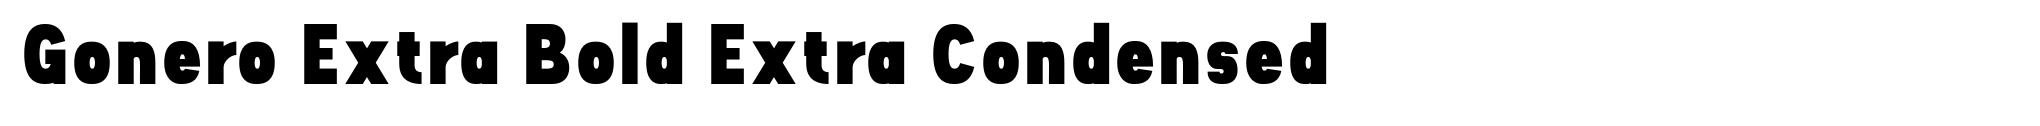 Gonero Extra Bold Extra Condensed image